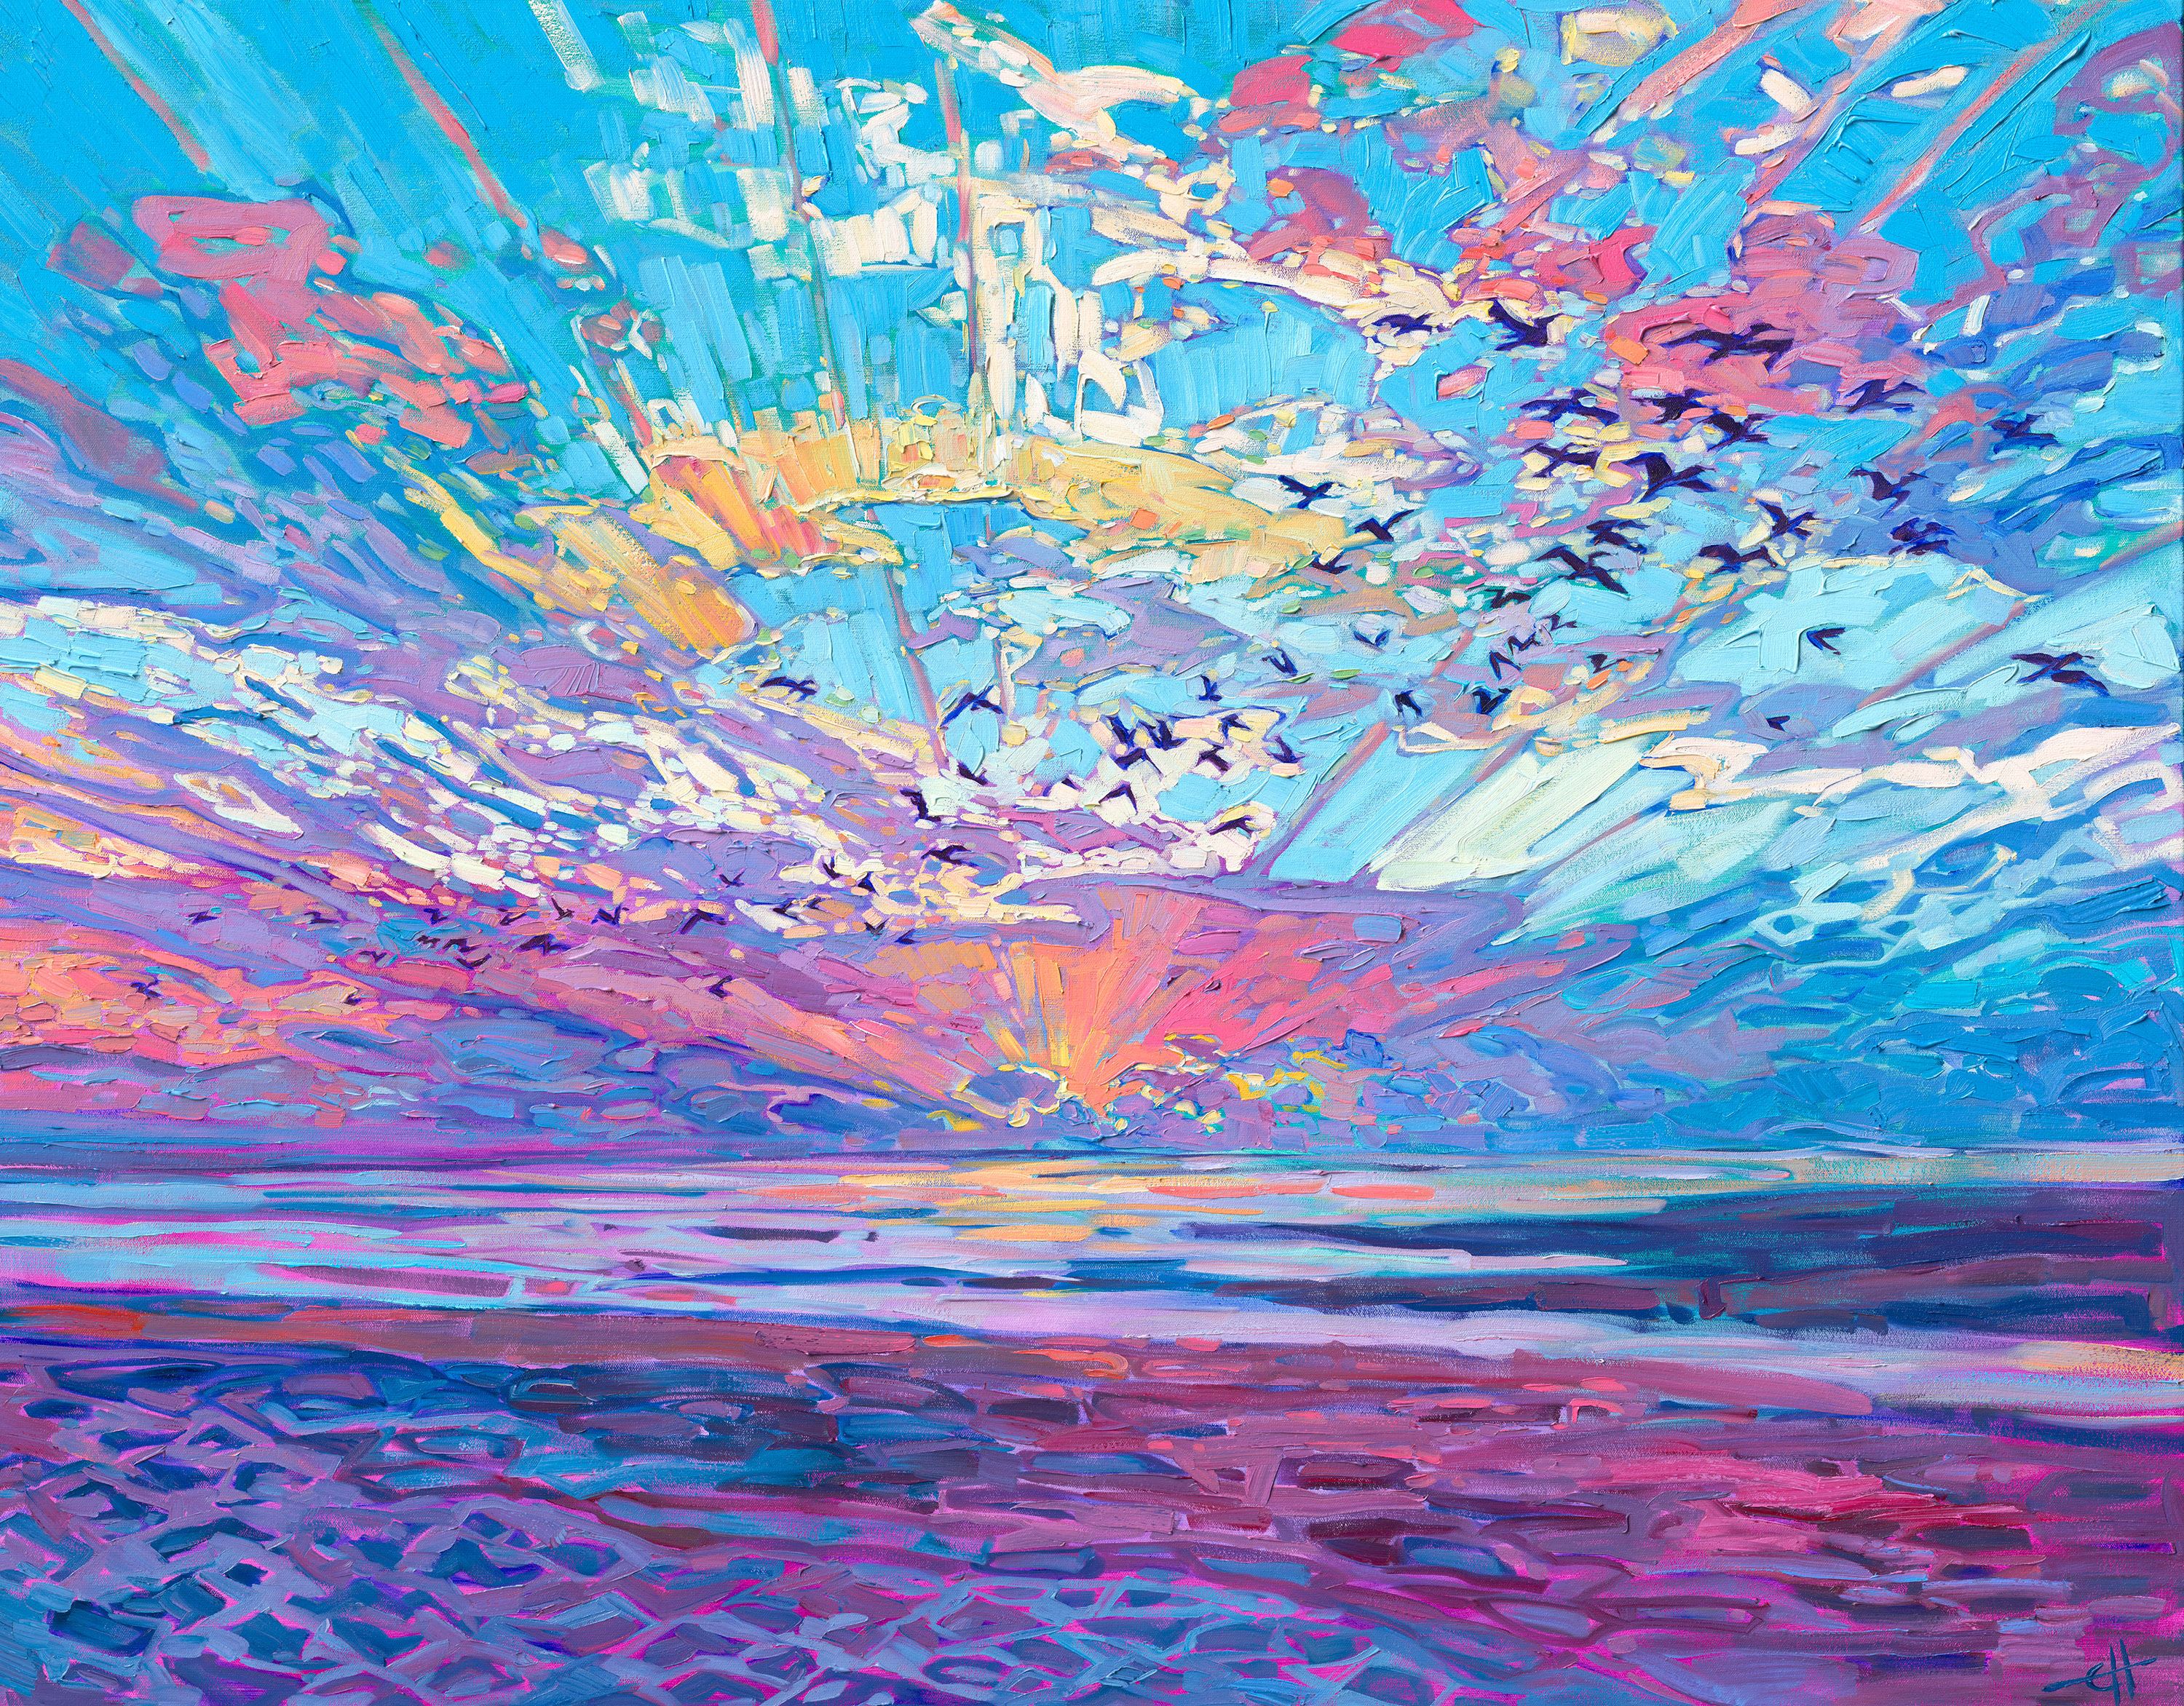 "Pelican Sky" by Erin Hanson